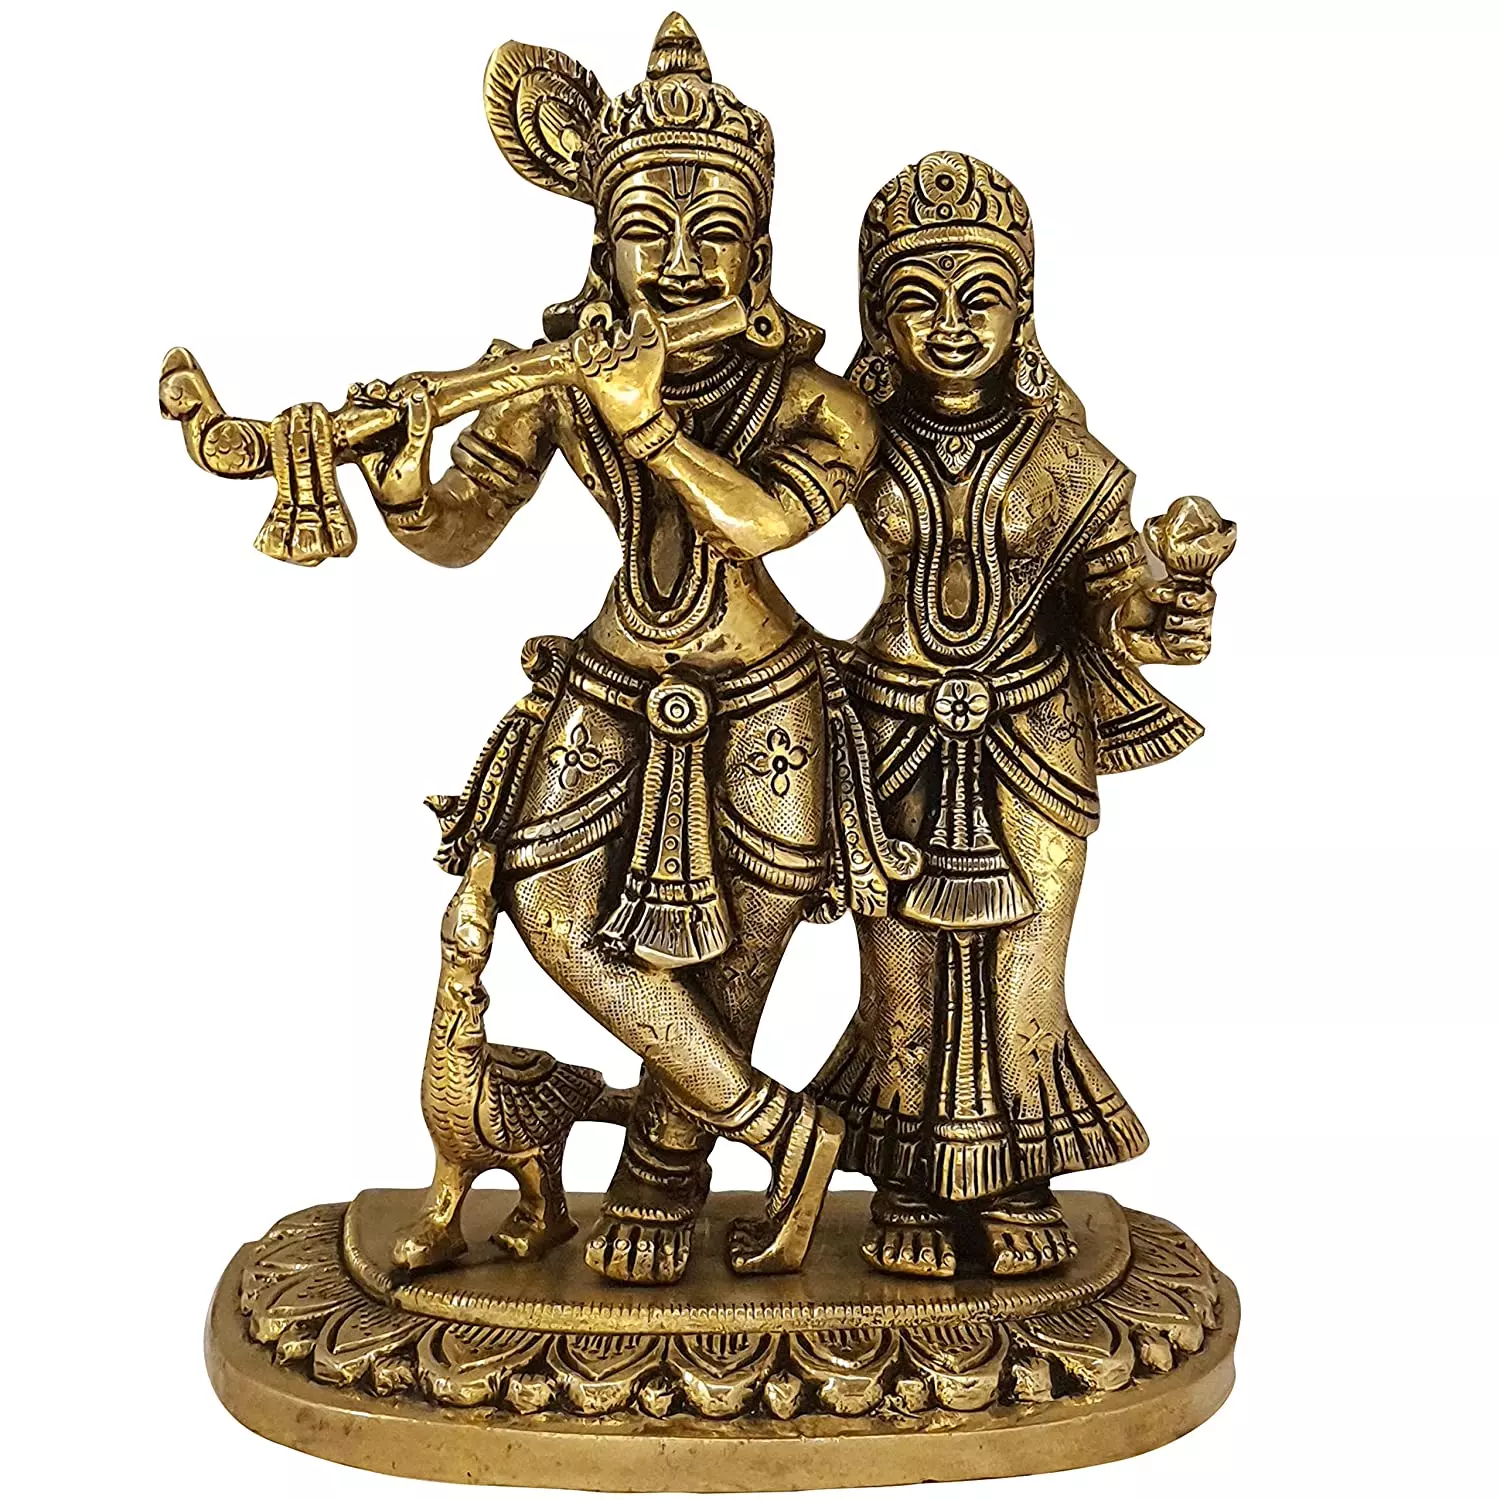 Why and When to gift a Radha Krishna Idol - Daily Pooja